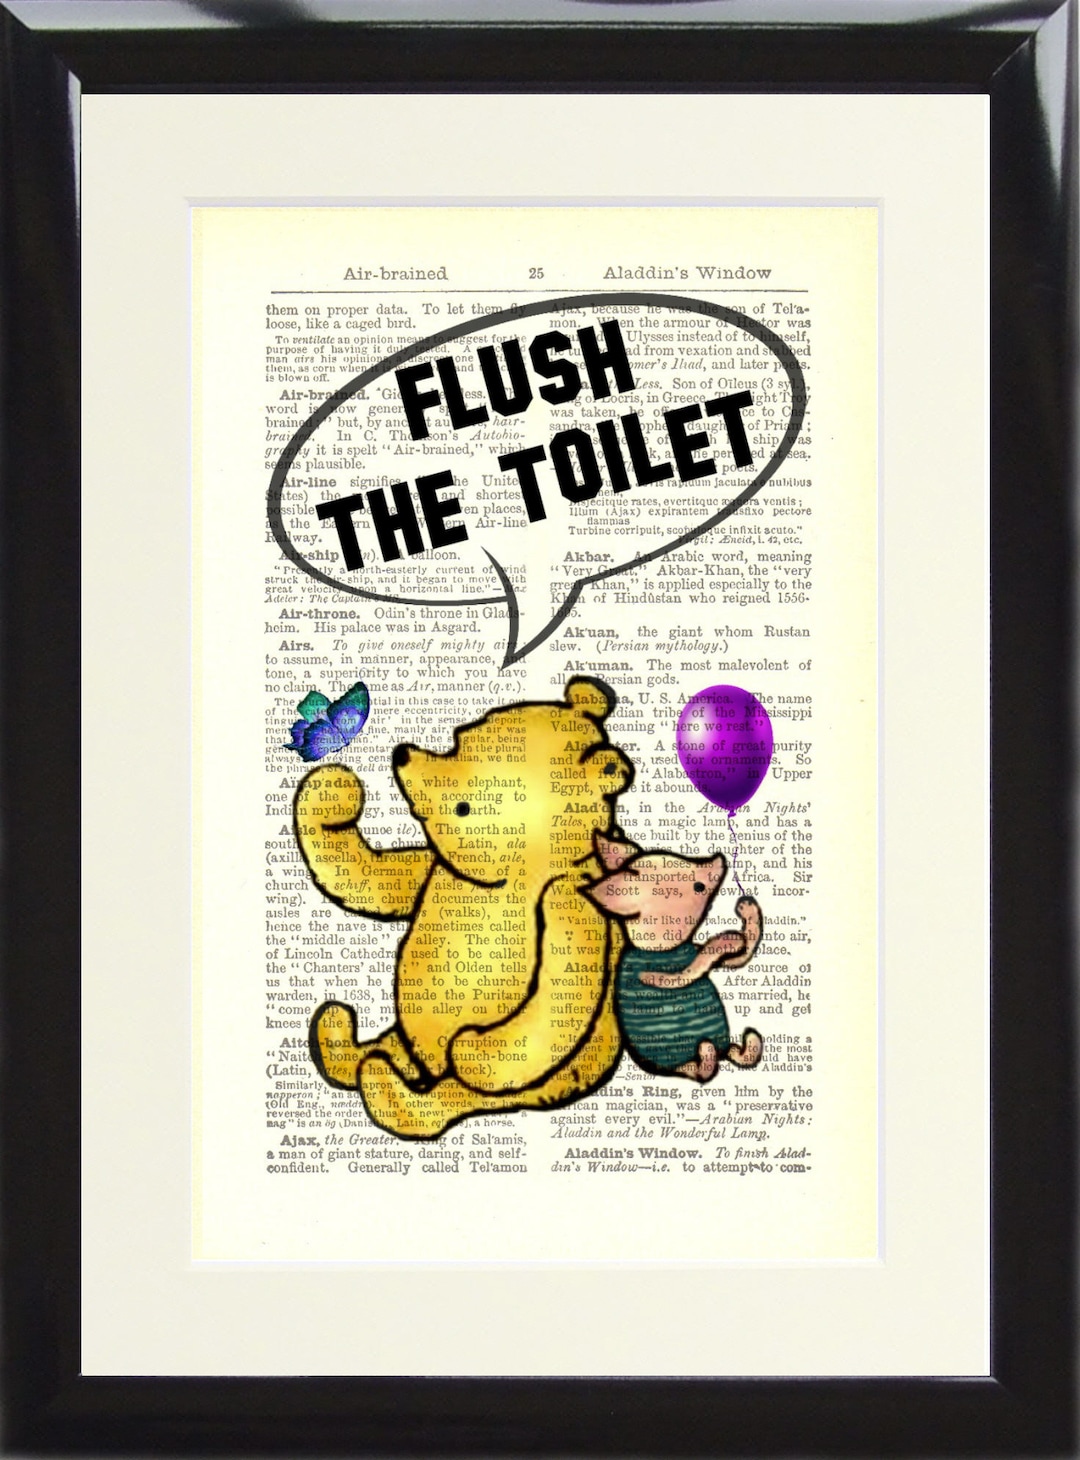 Funny winnie the pooh and friends cartoon bathroom set. in 2023